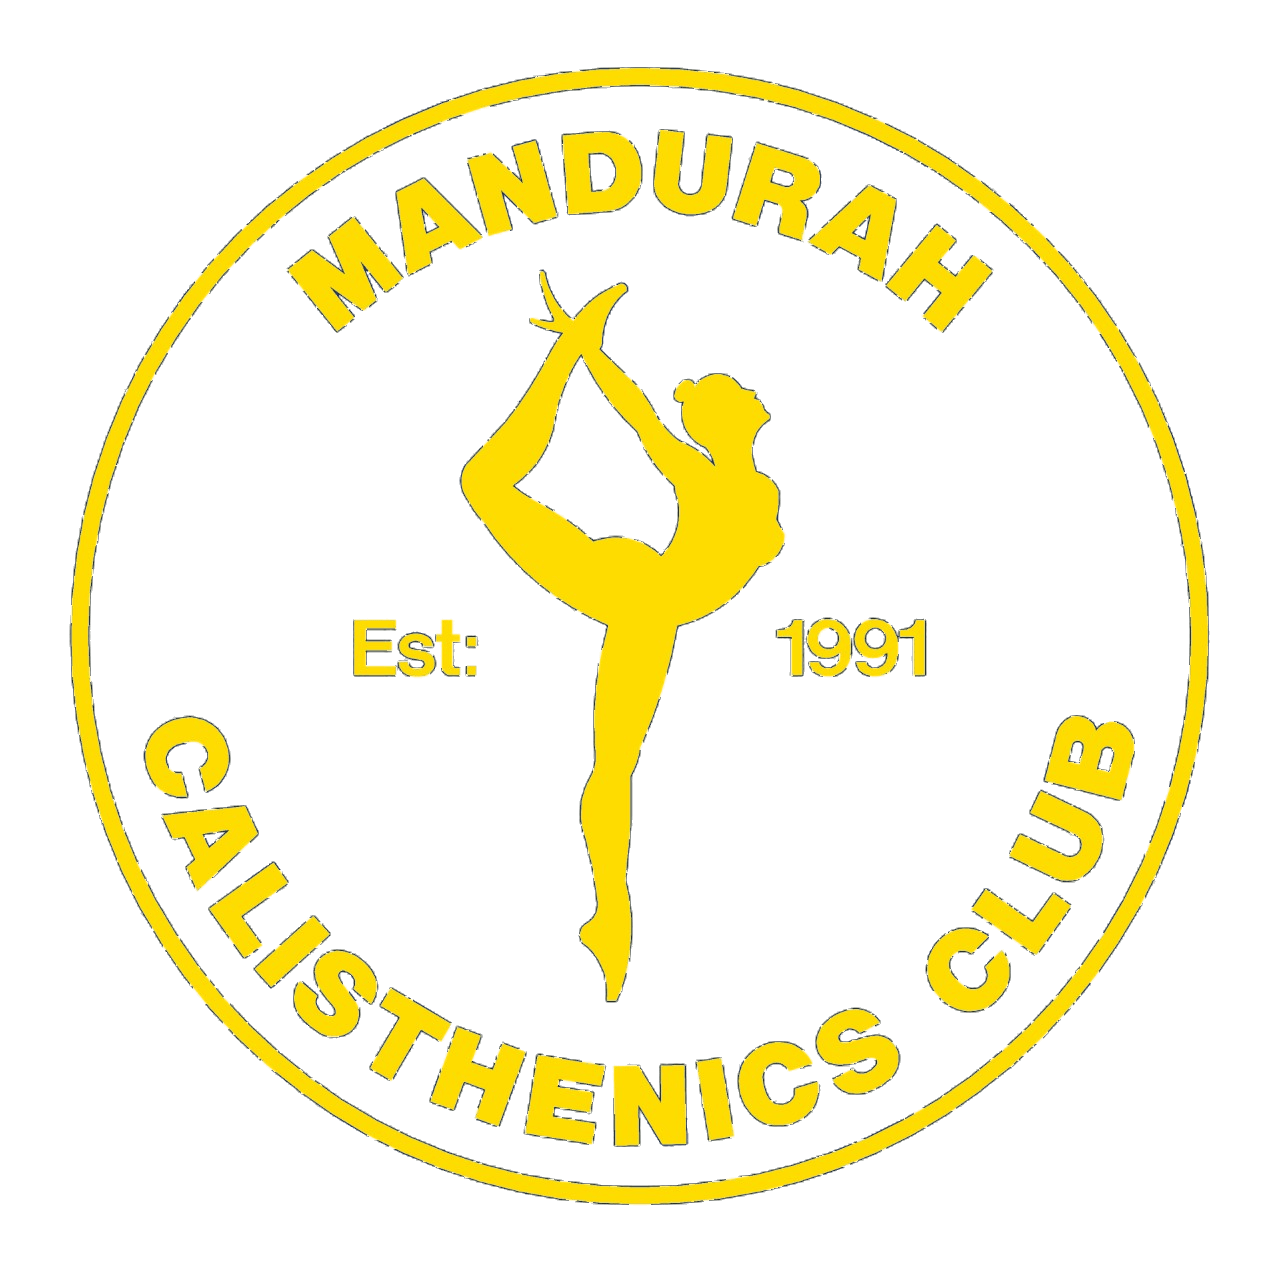 Mandurah Calisthenics Club